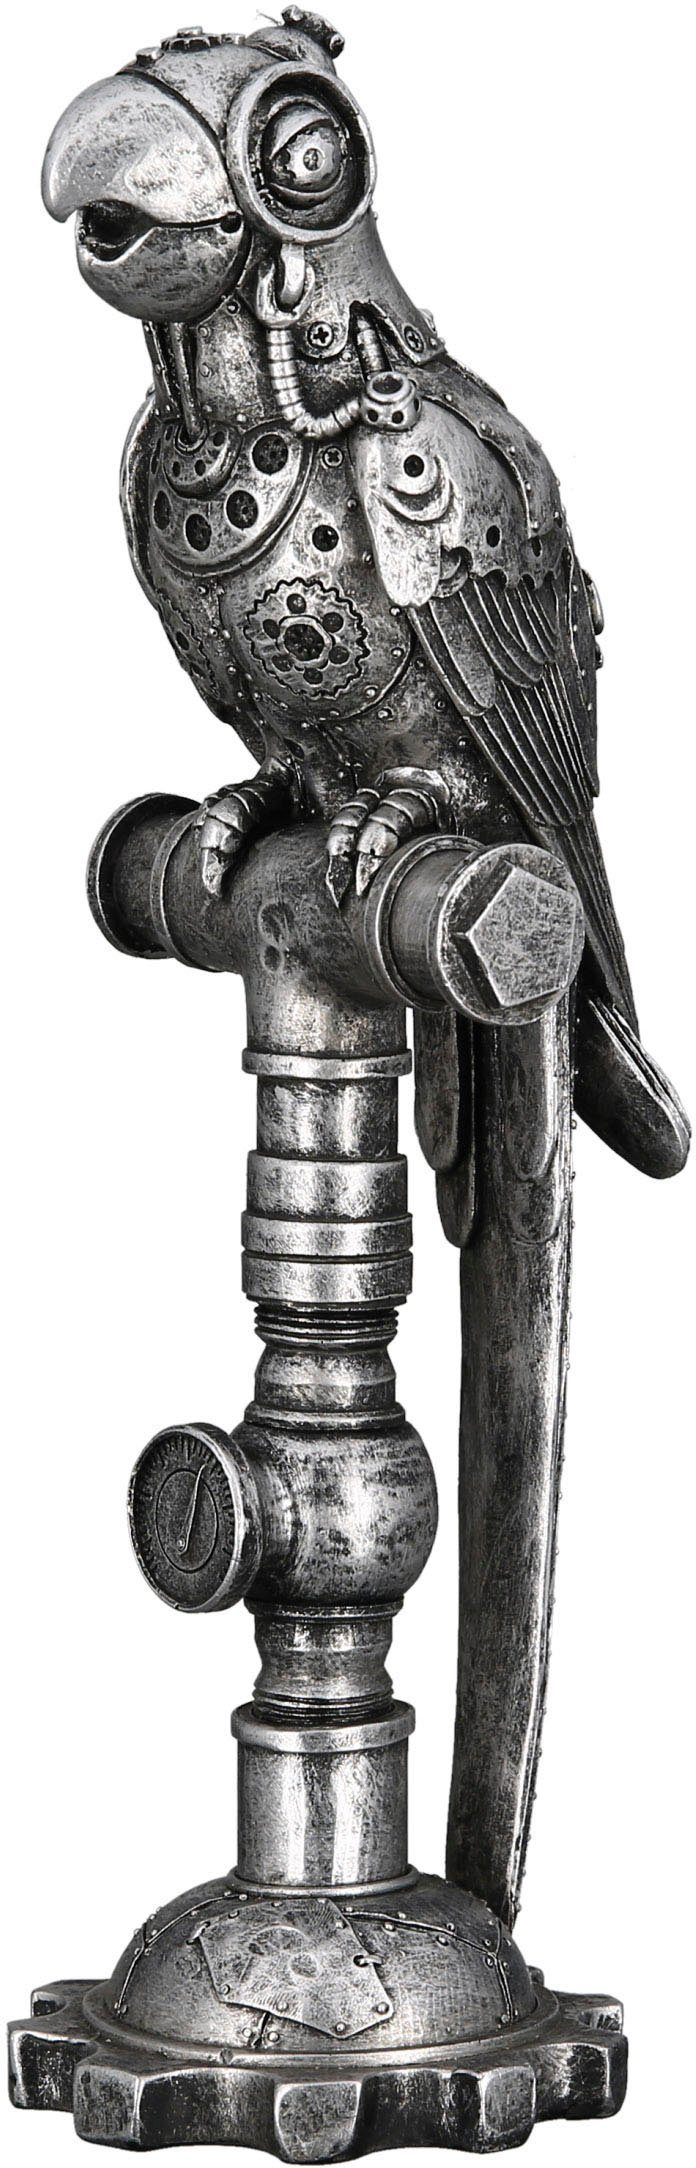 Casablanca by Gilde Tierfigur Steampunk St) Parrot (1 Skulptur